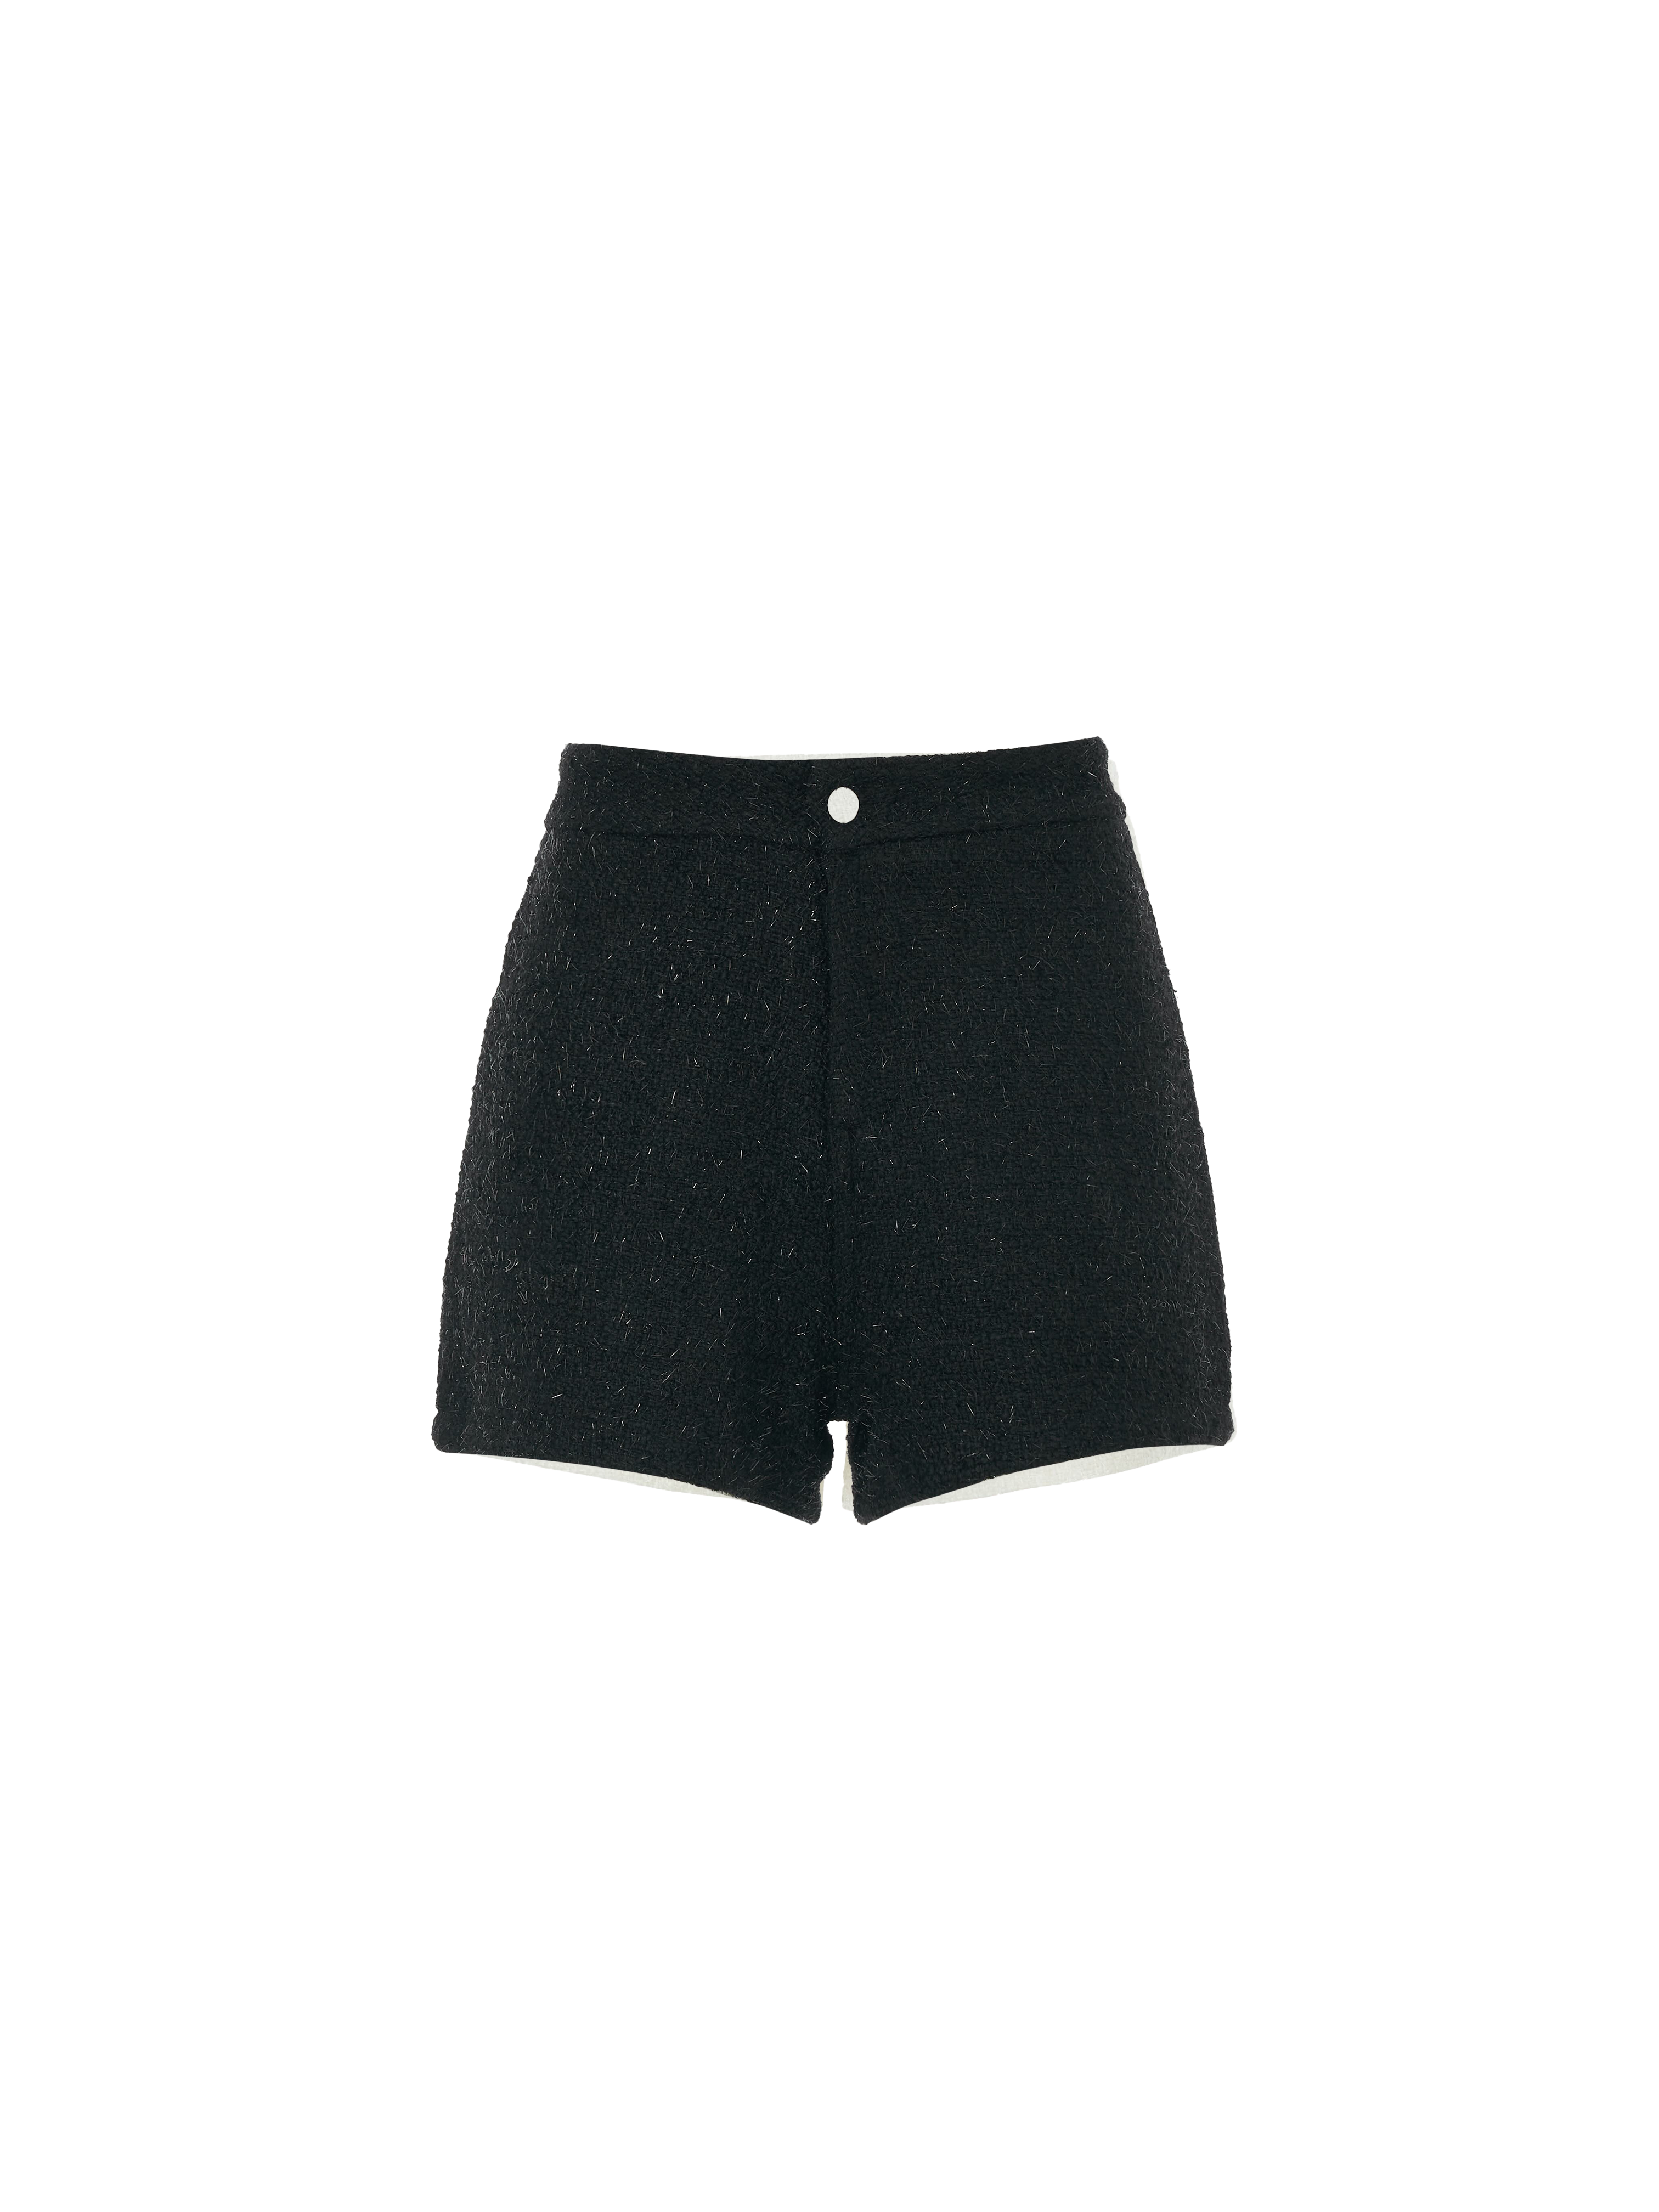 shimmer tweed shorts - black